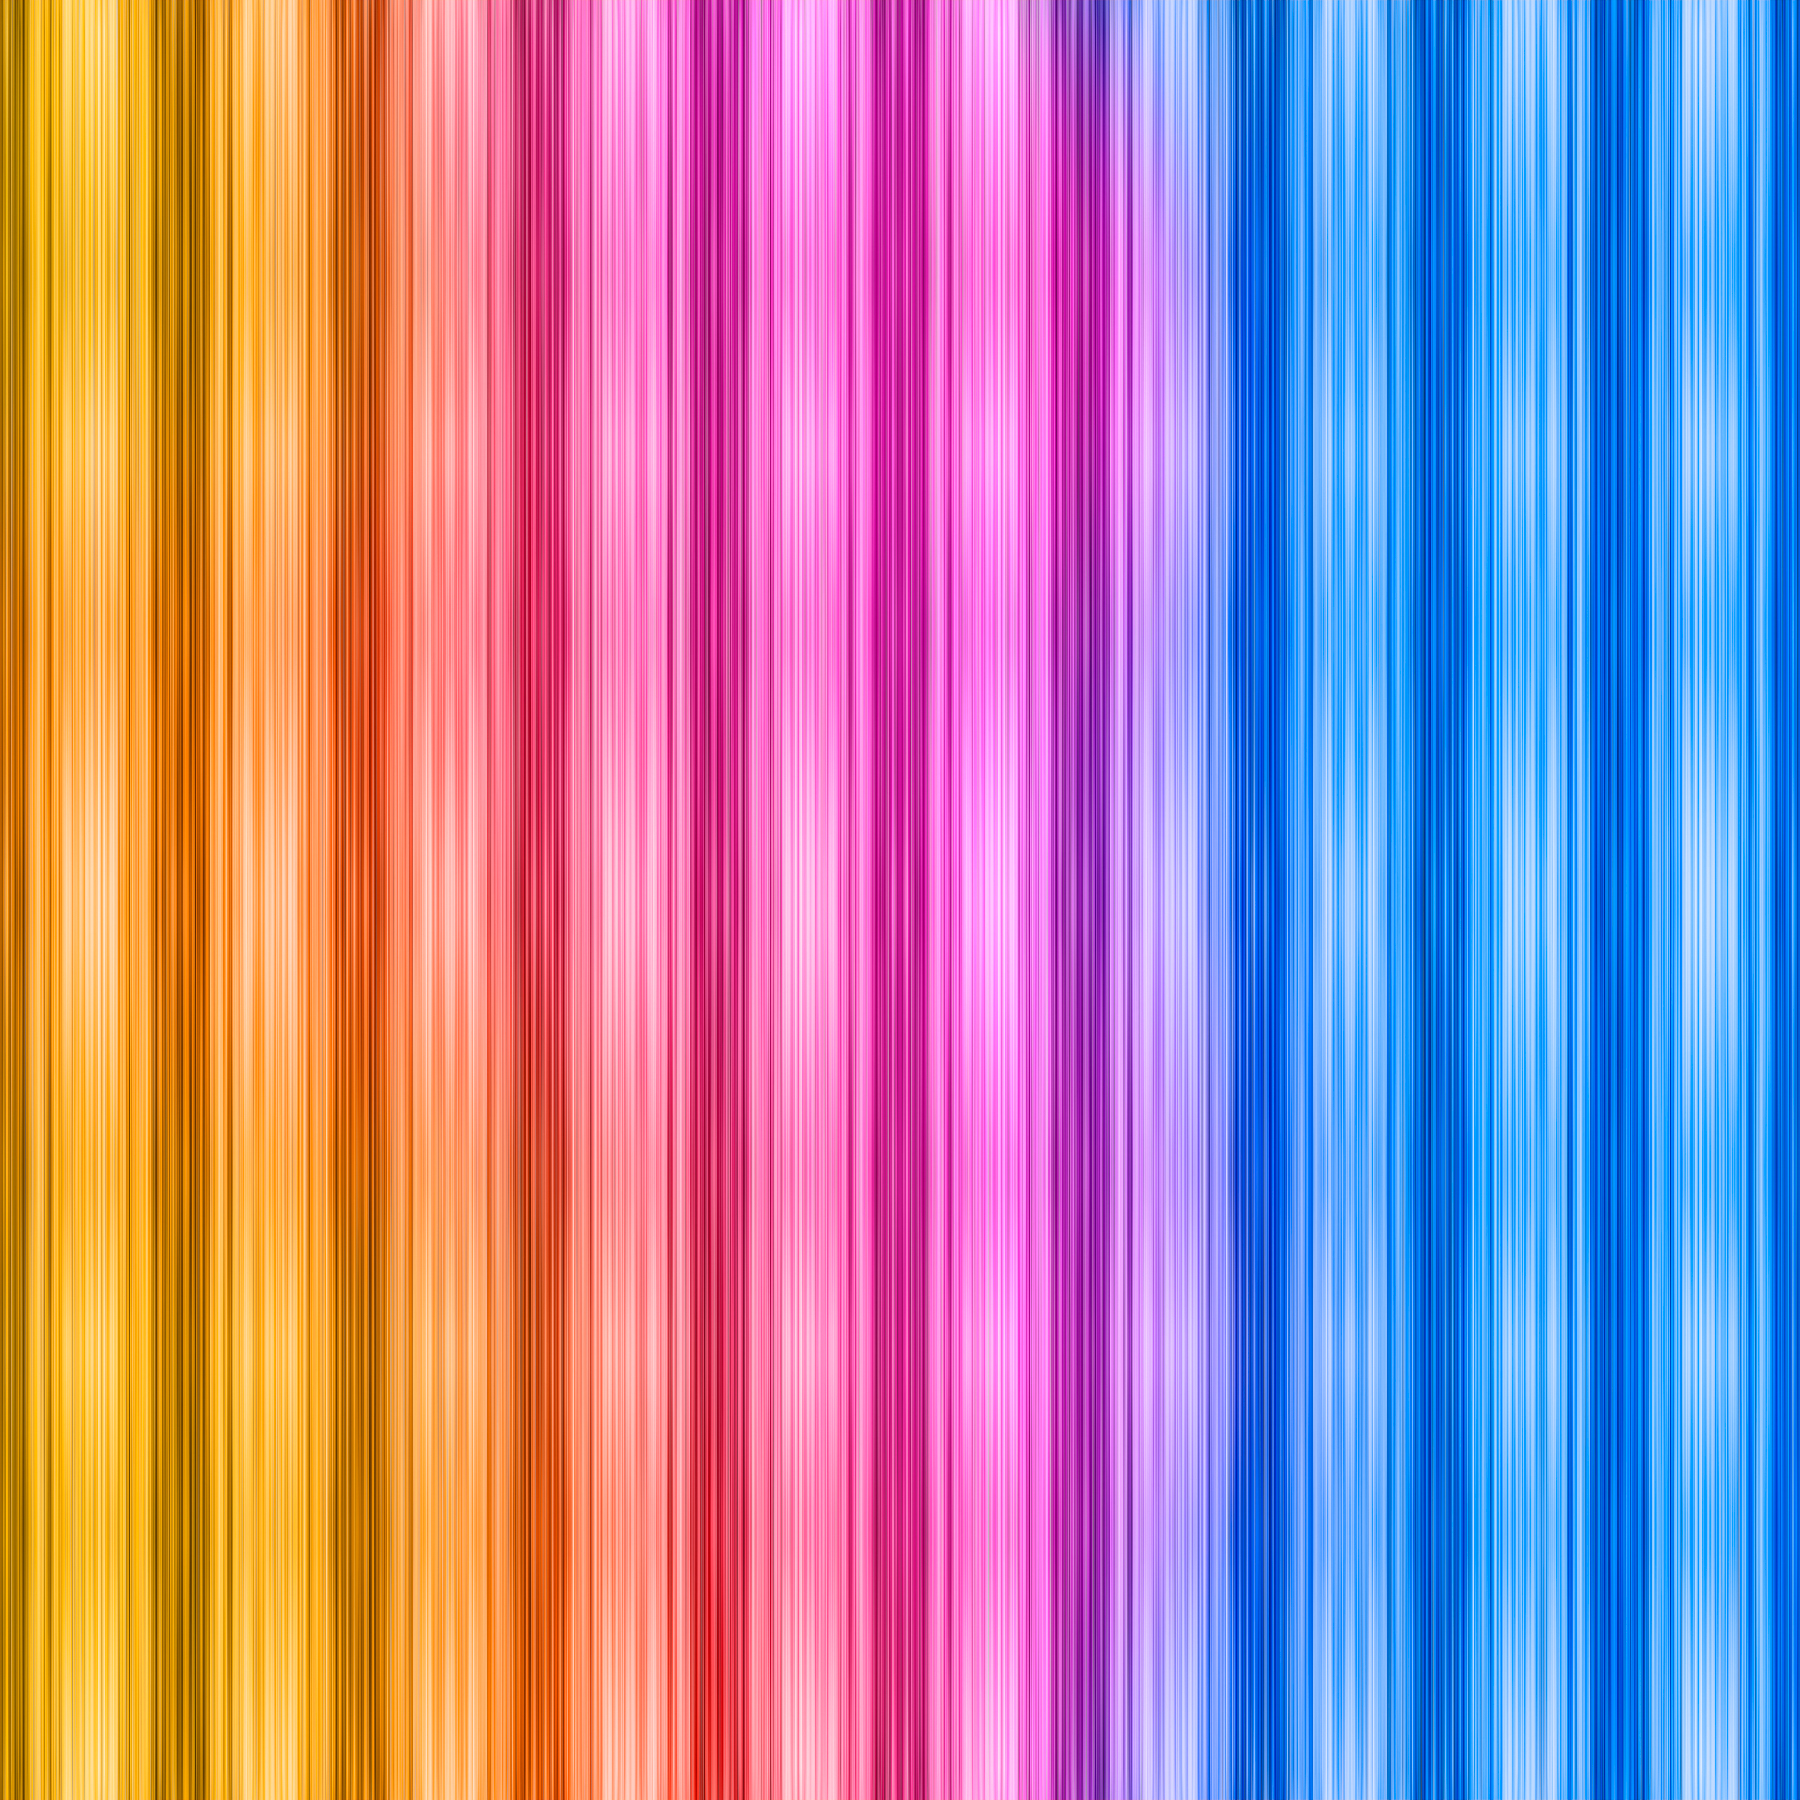 Vibrant abstract blur photo